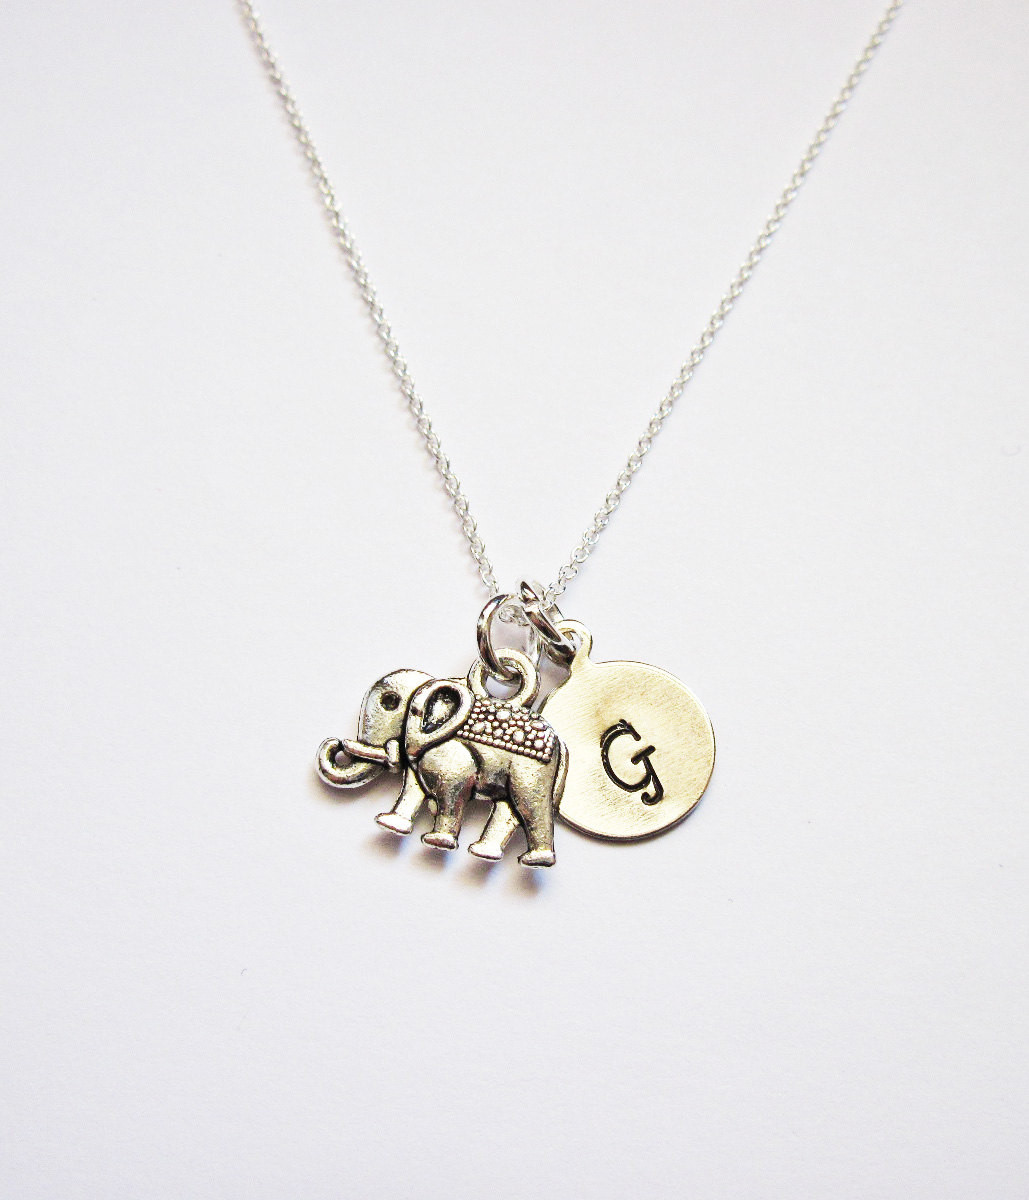 Sterling Silver Elephant Necklace
 Tiny Sterling Silver Elephant Necklace personalized elephant